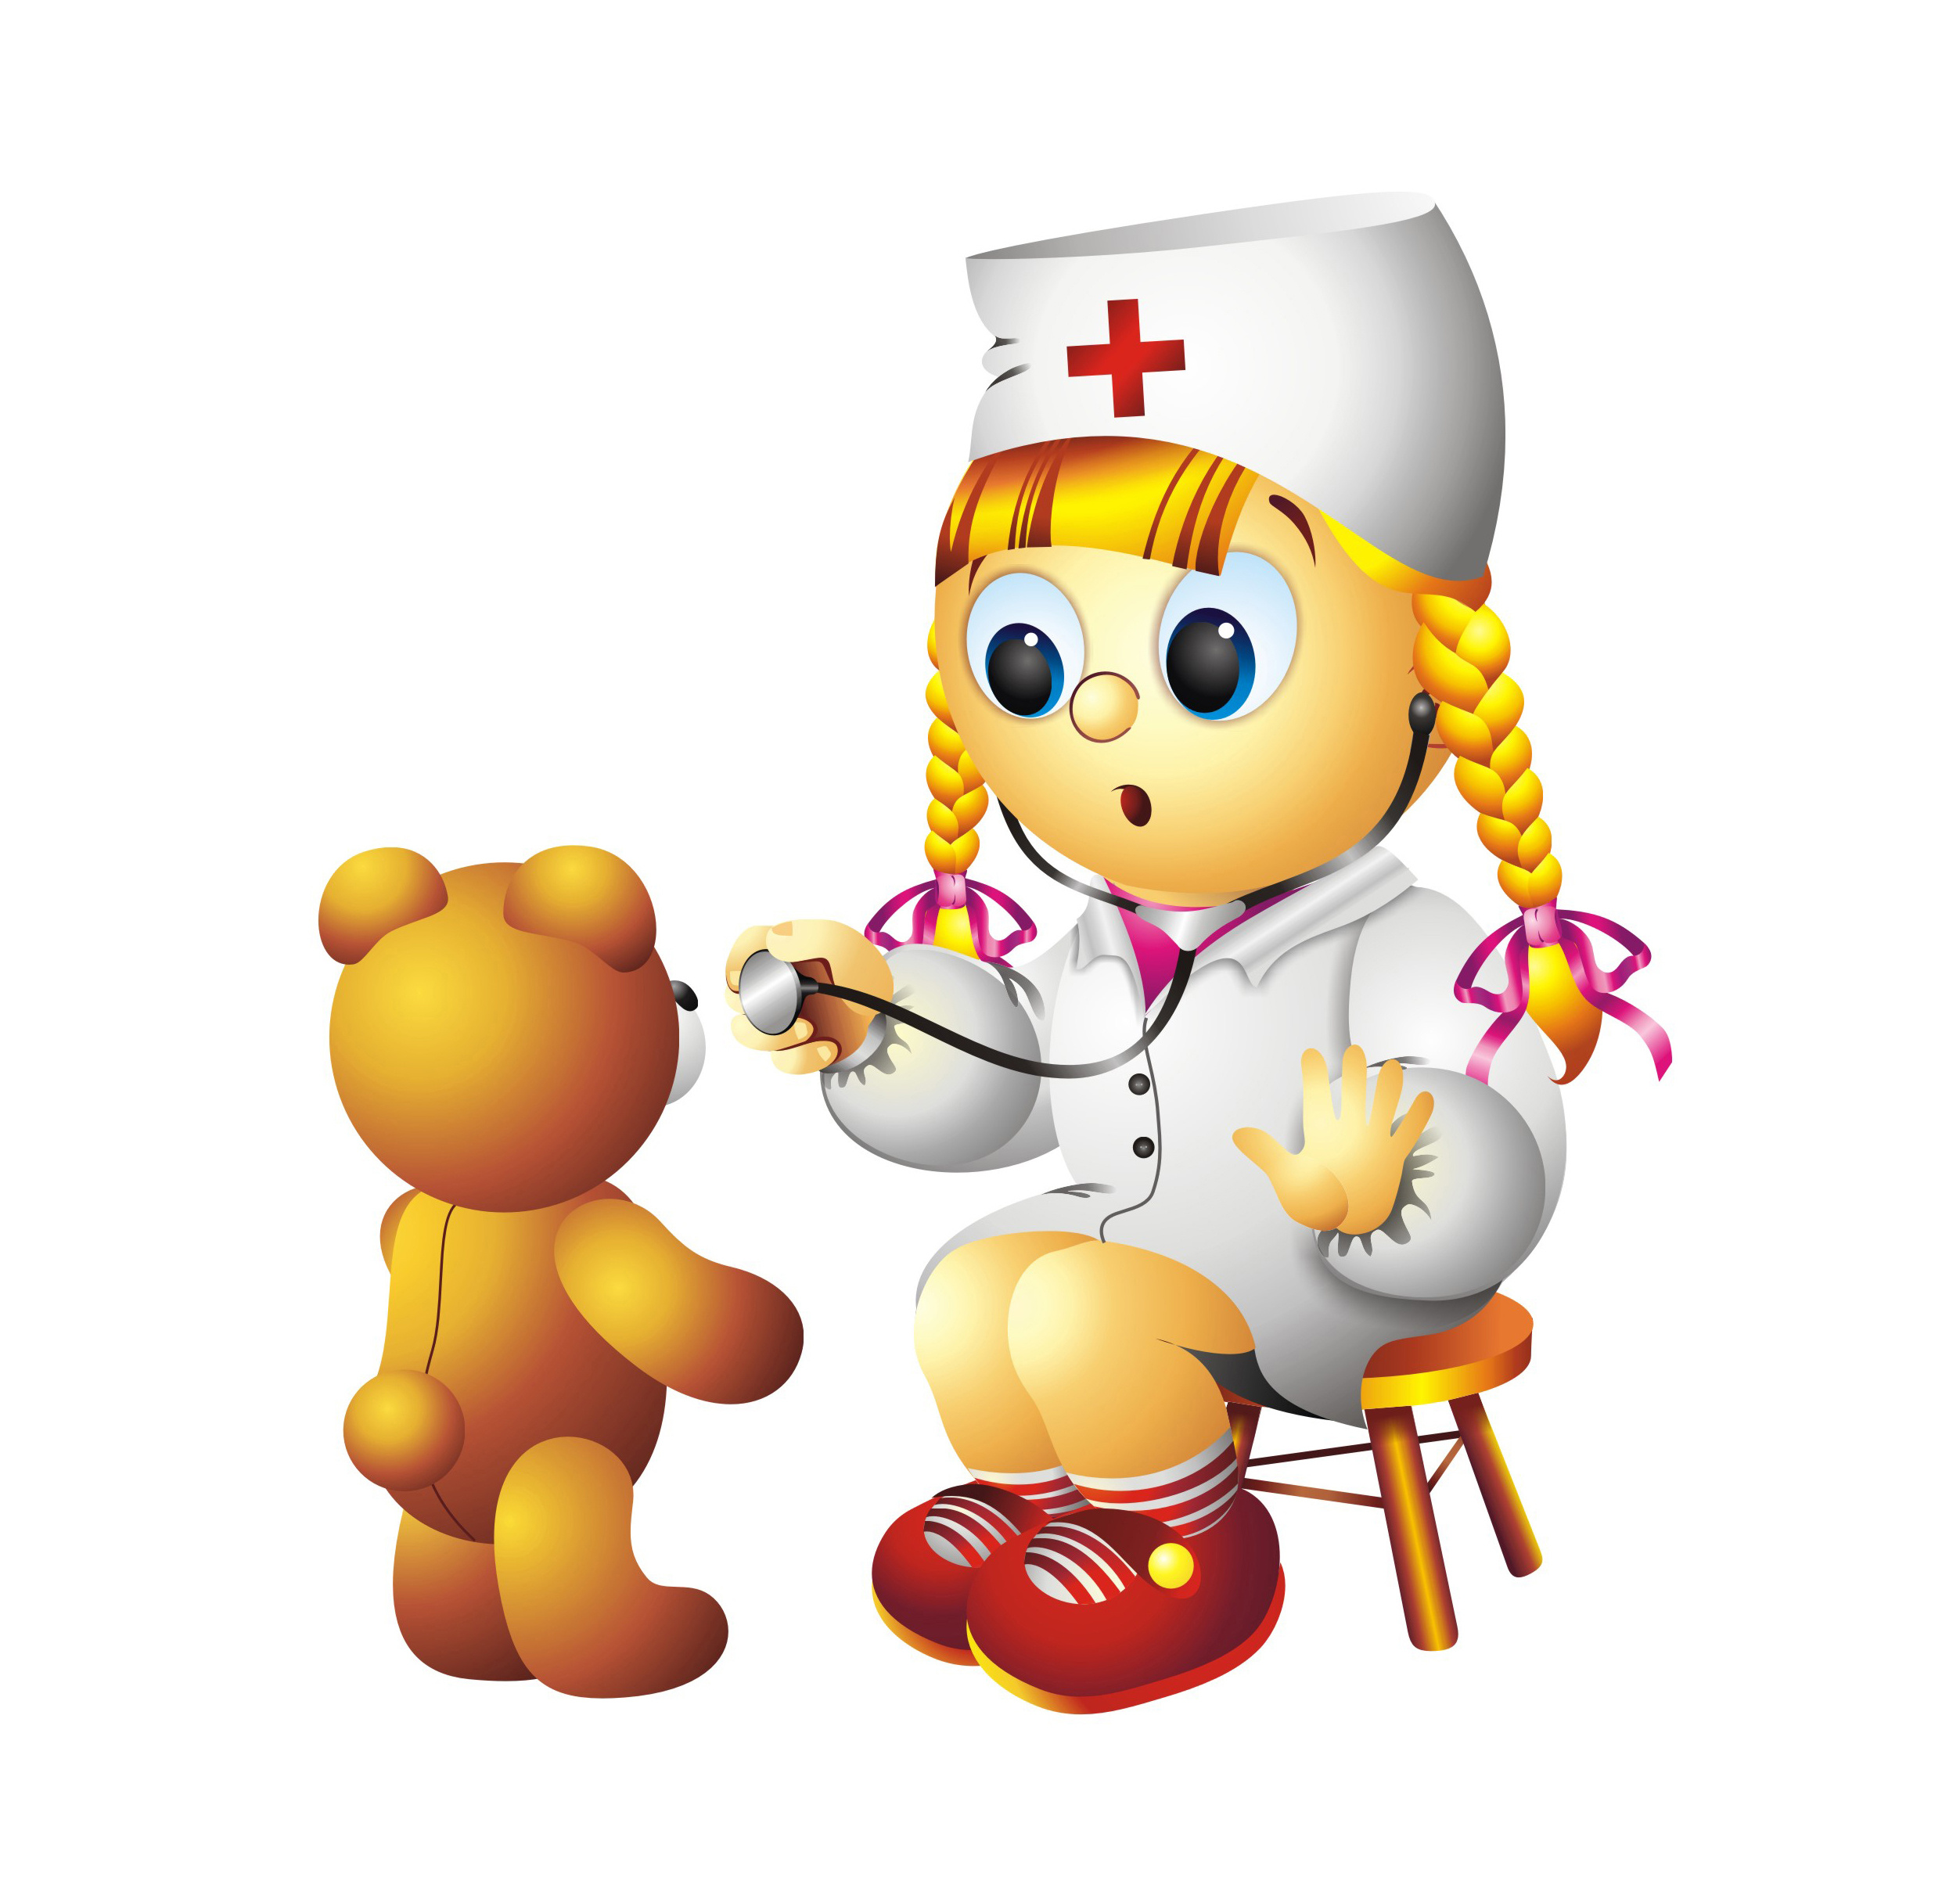 Pediatric nursing | Nursing | Pinterest